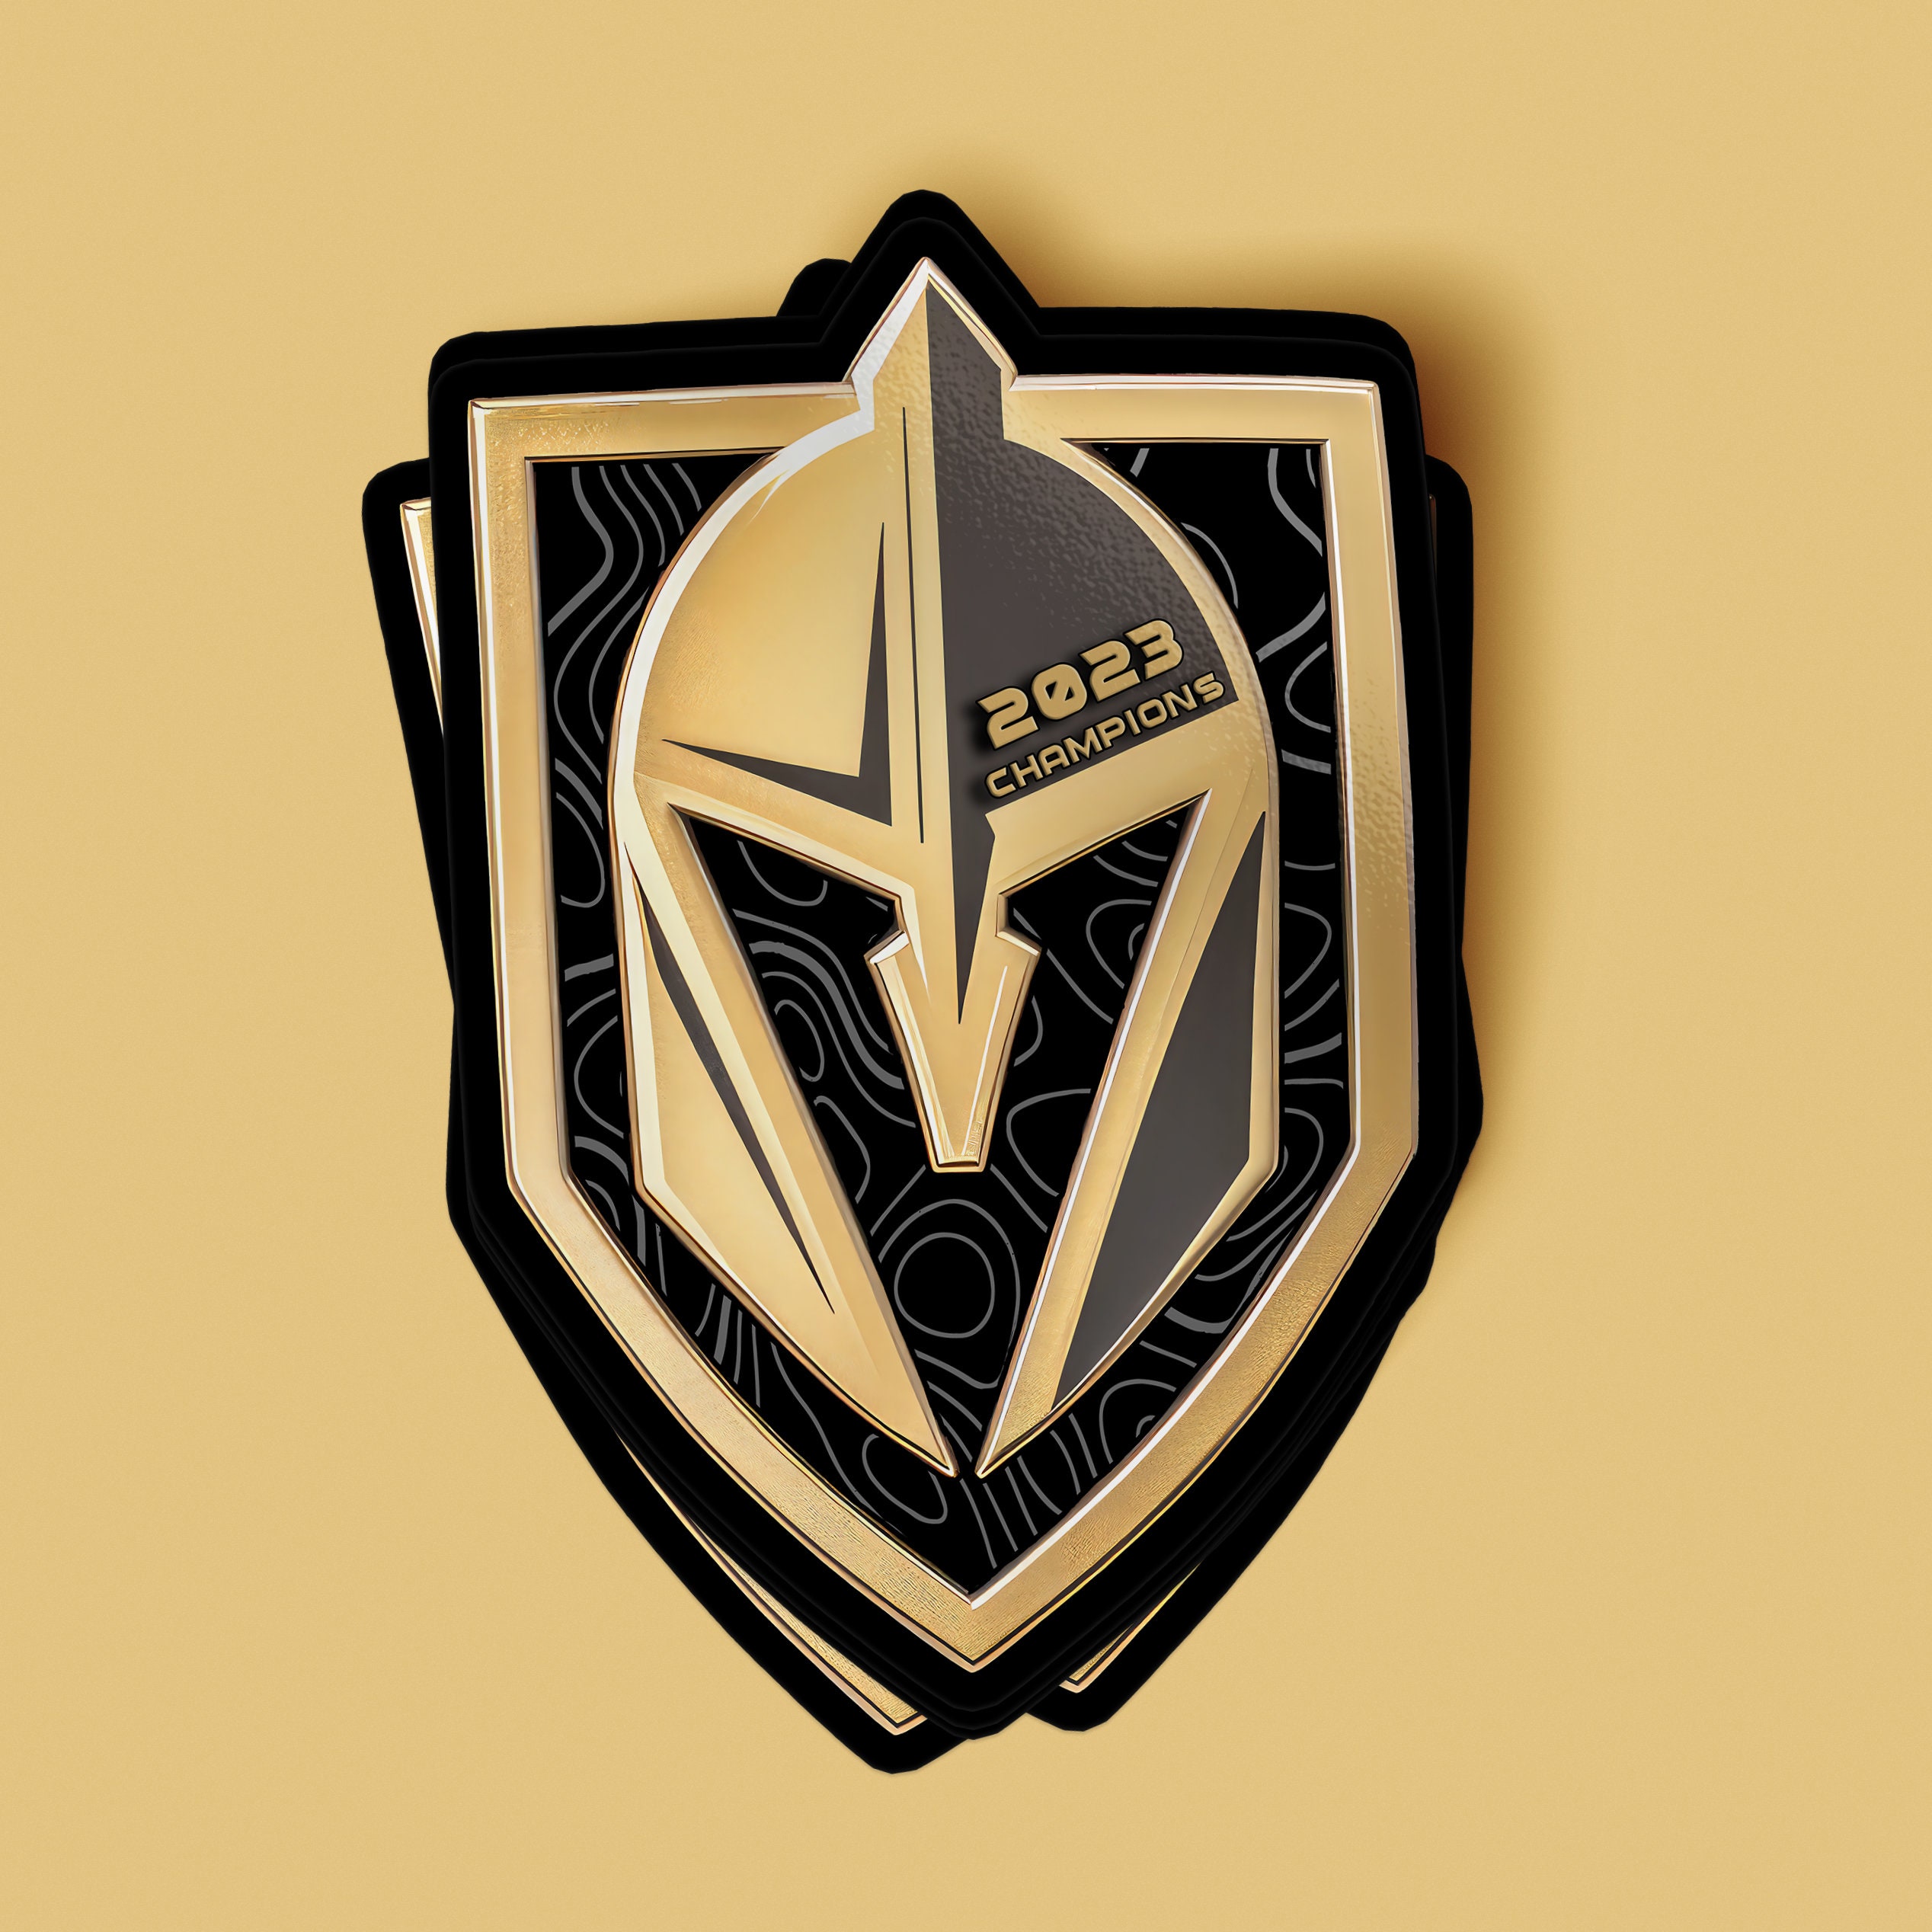 Vegas Golden Knights Reverse Retro Collector Pin